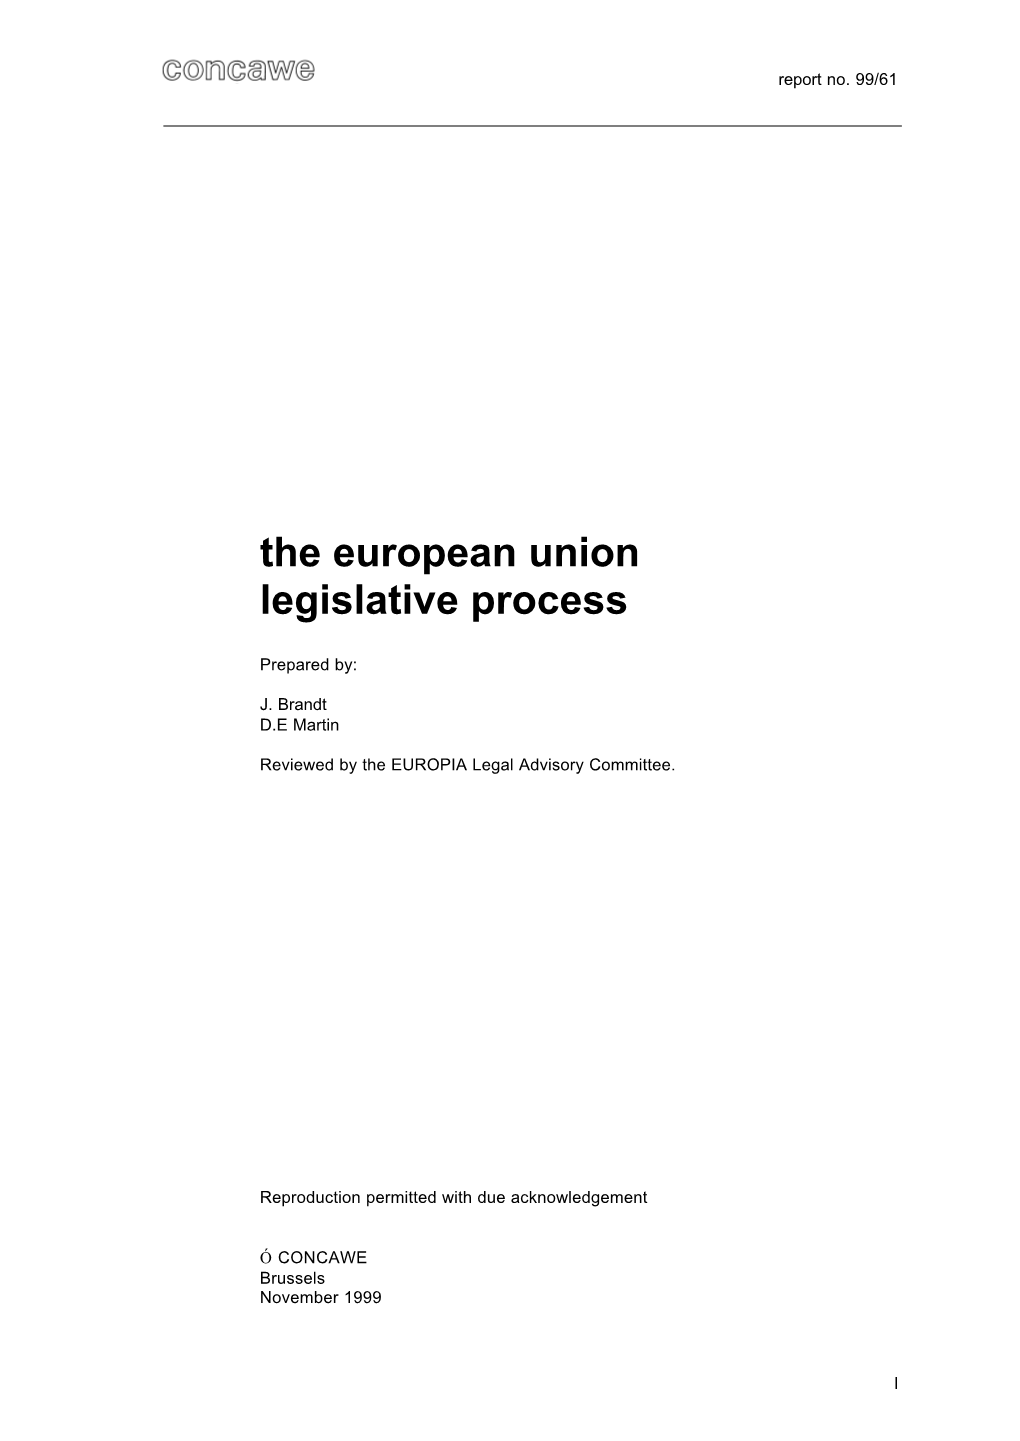 The European Union Legislative Process